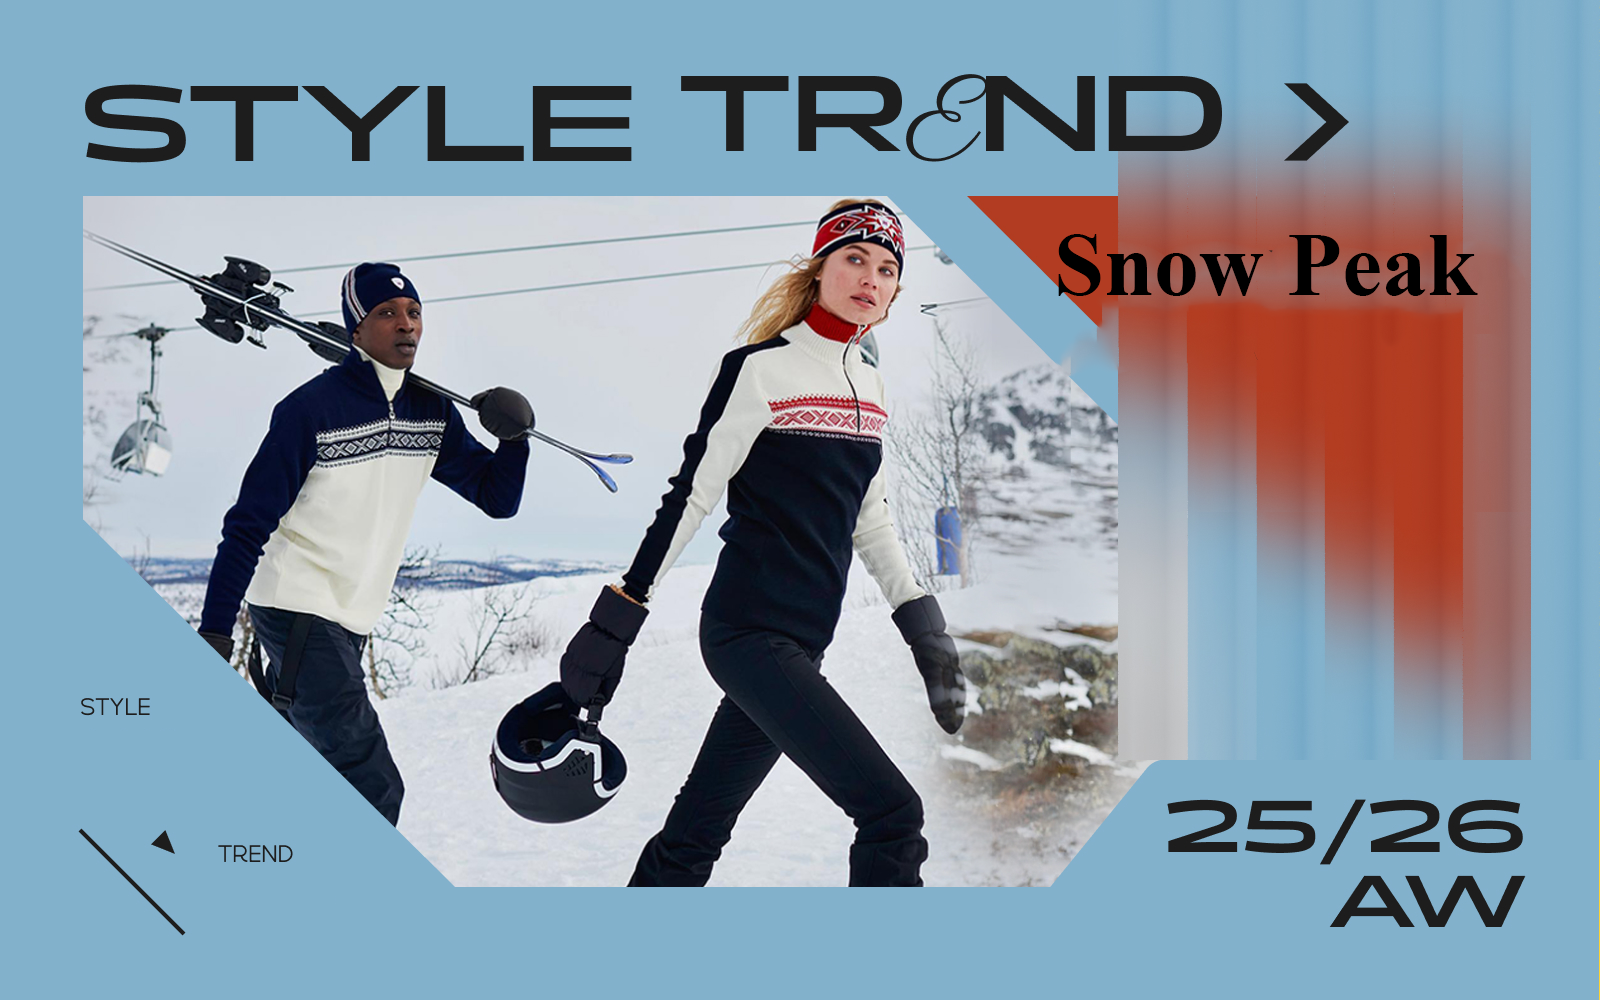 Snow Peak -- The Style Trend of Skiwear